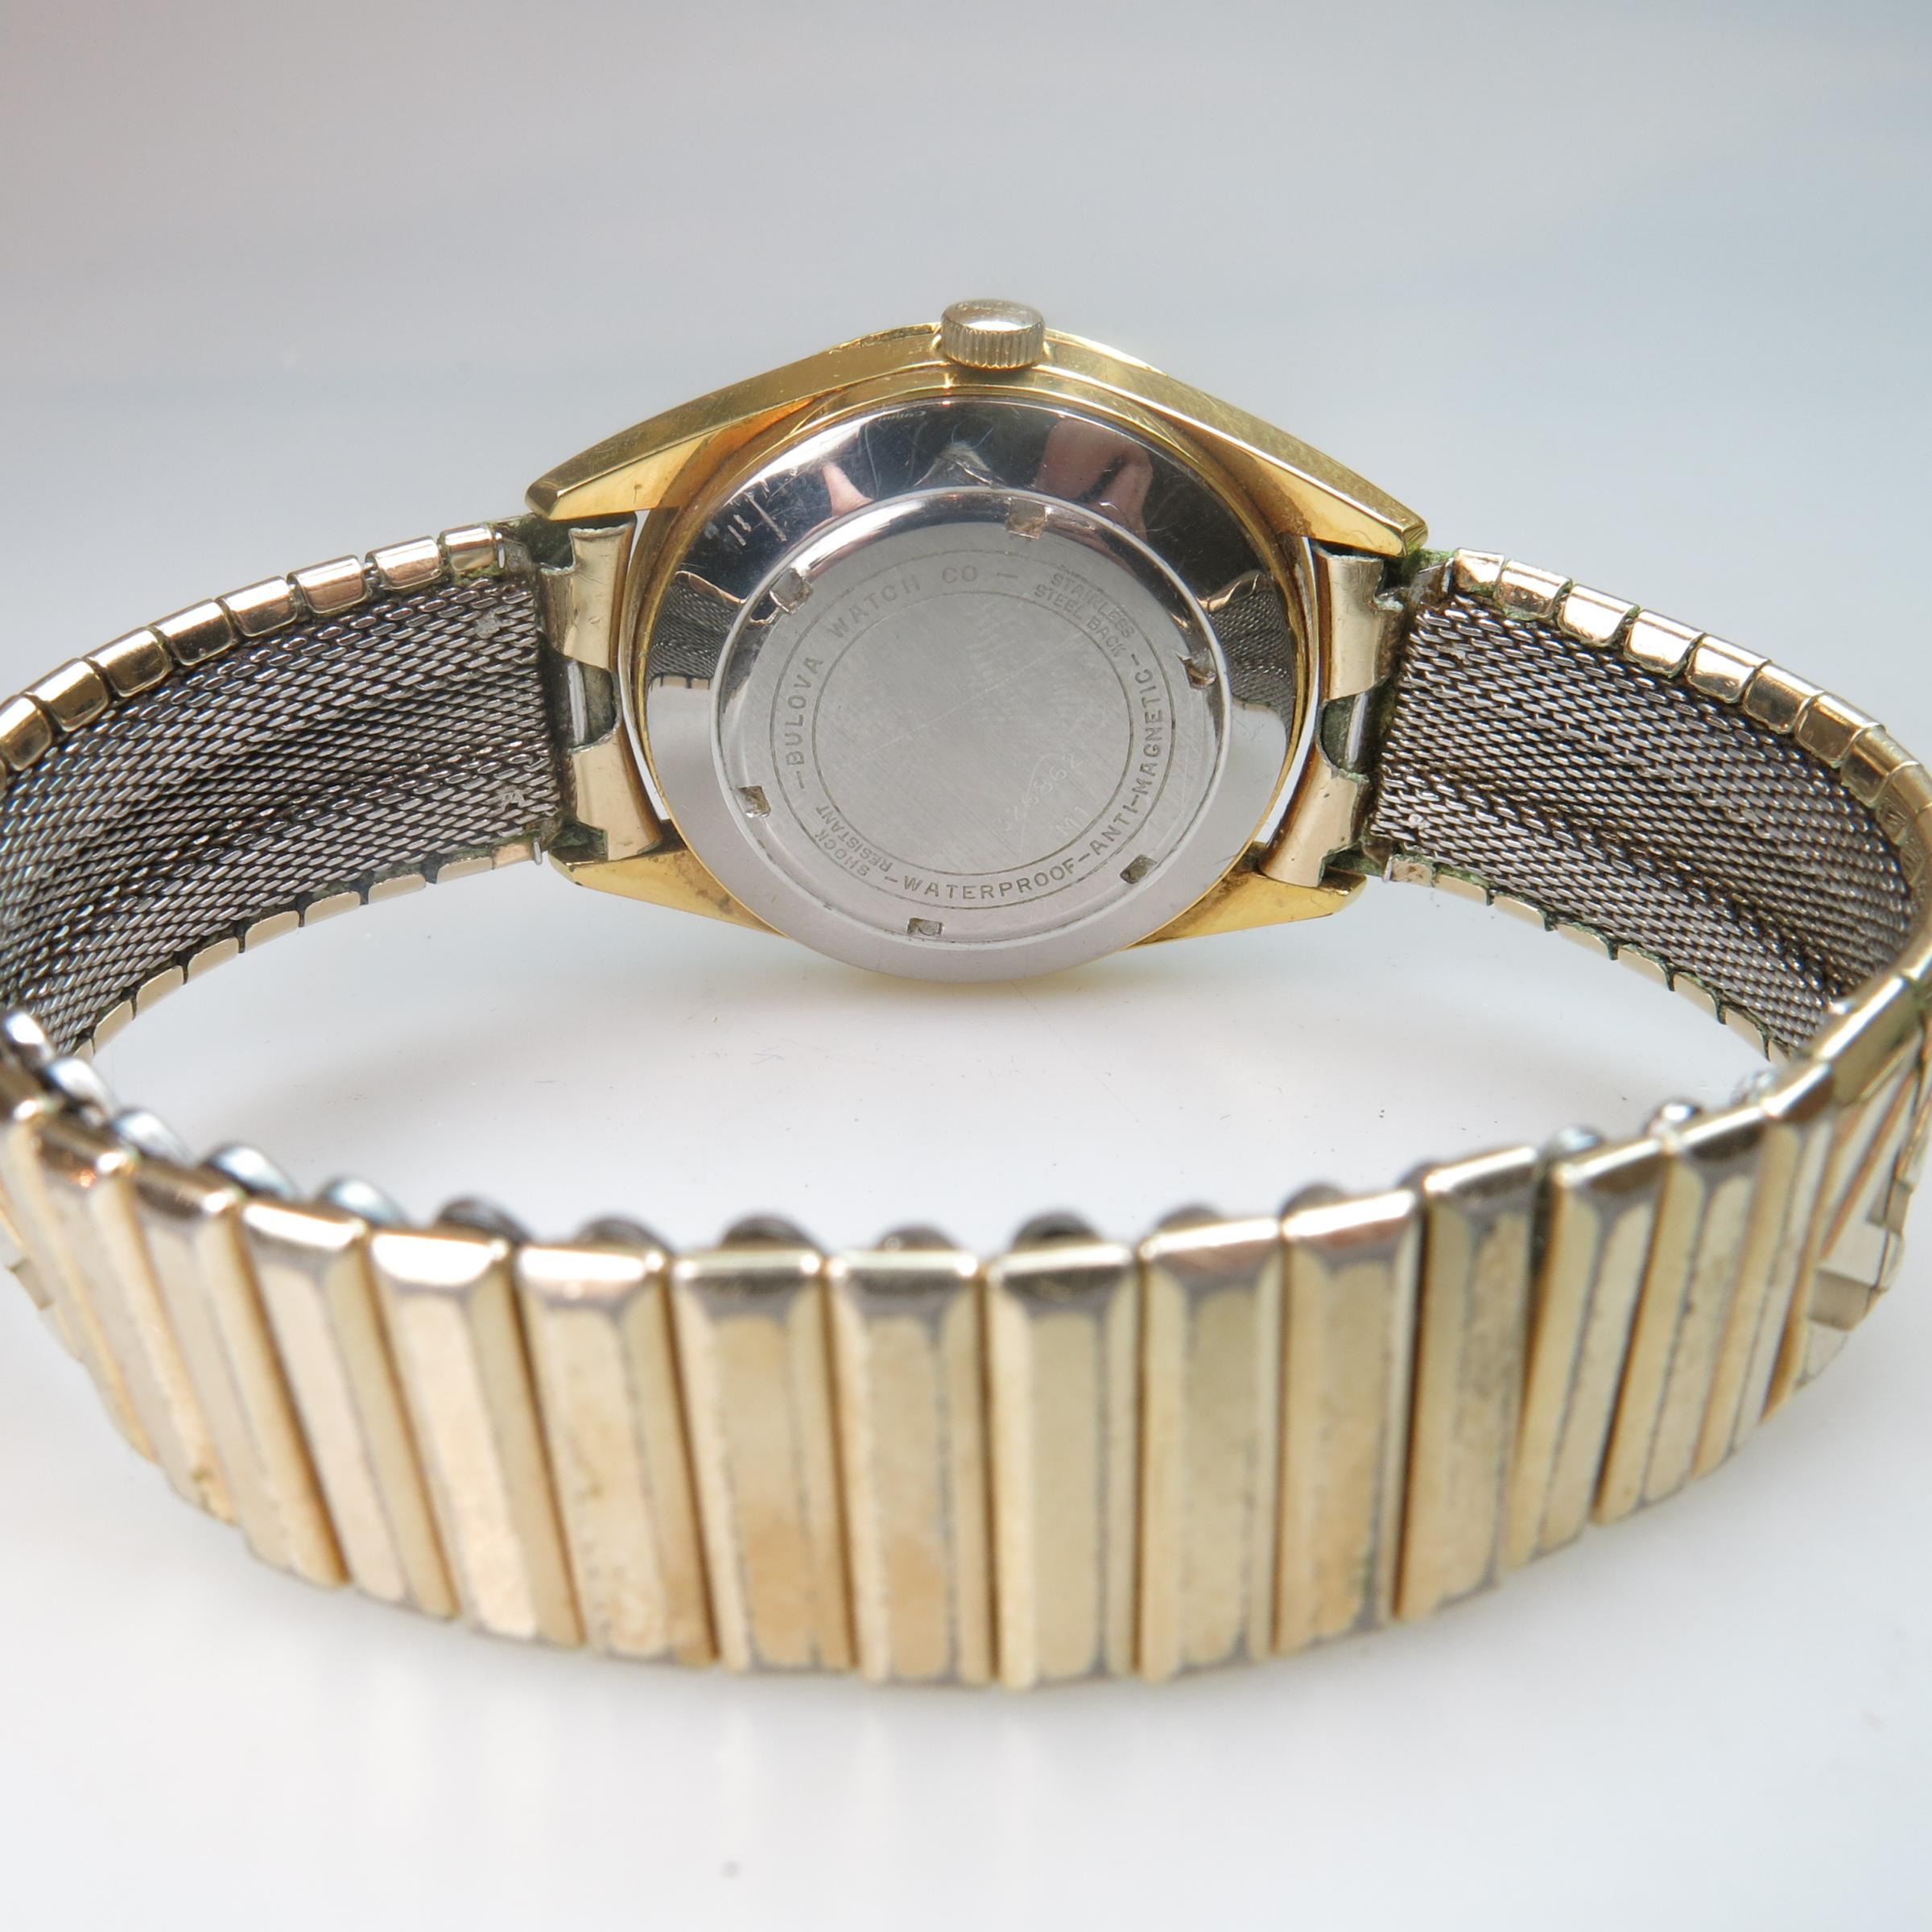 Bulova Automatic Wristwatch With Date